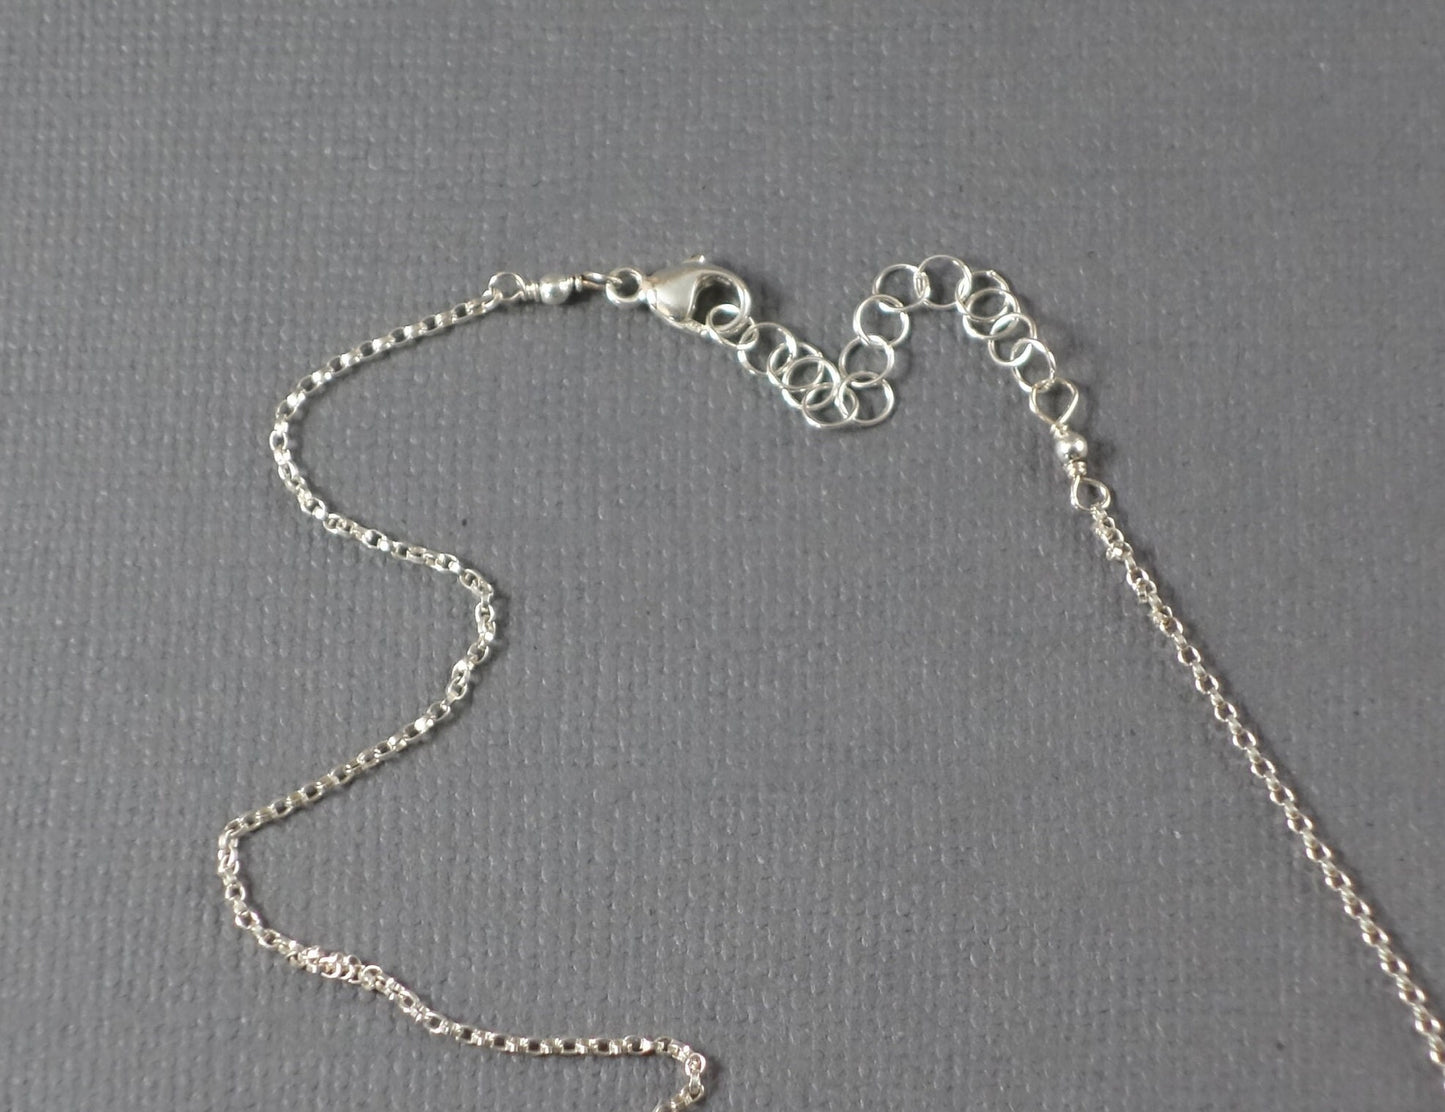 Garnet Pendant, Garnet Necklace, Flower Pendant, Flower Necklace, Silver Garnet Necklace, Silver Garnet Pendant, Whimsical Necklace